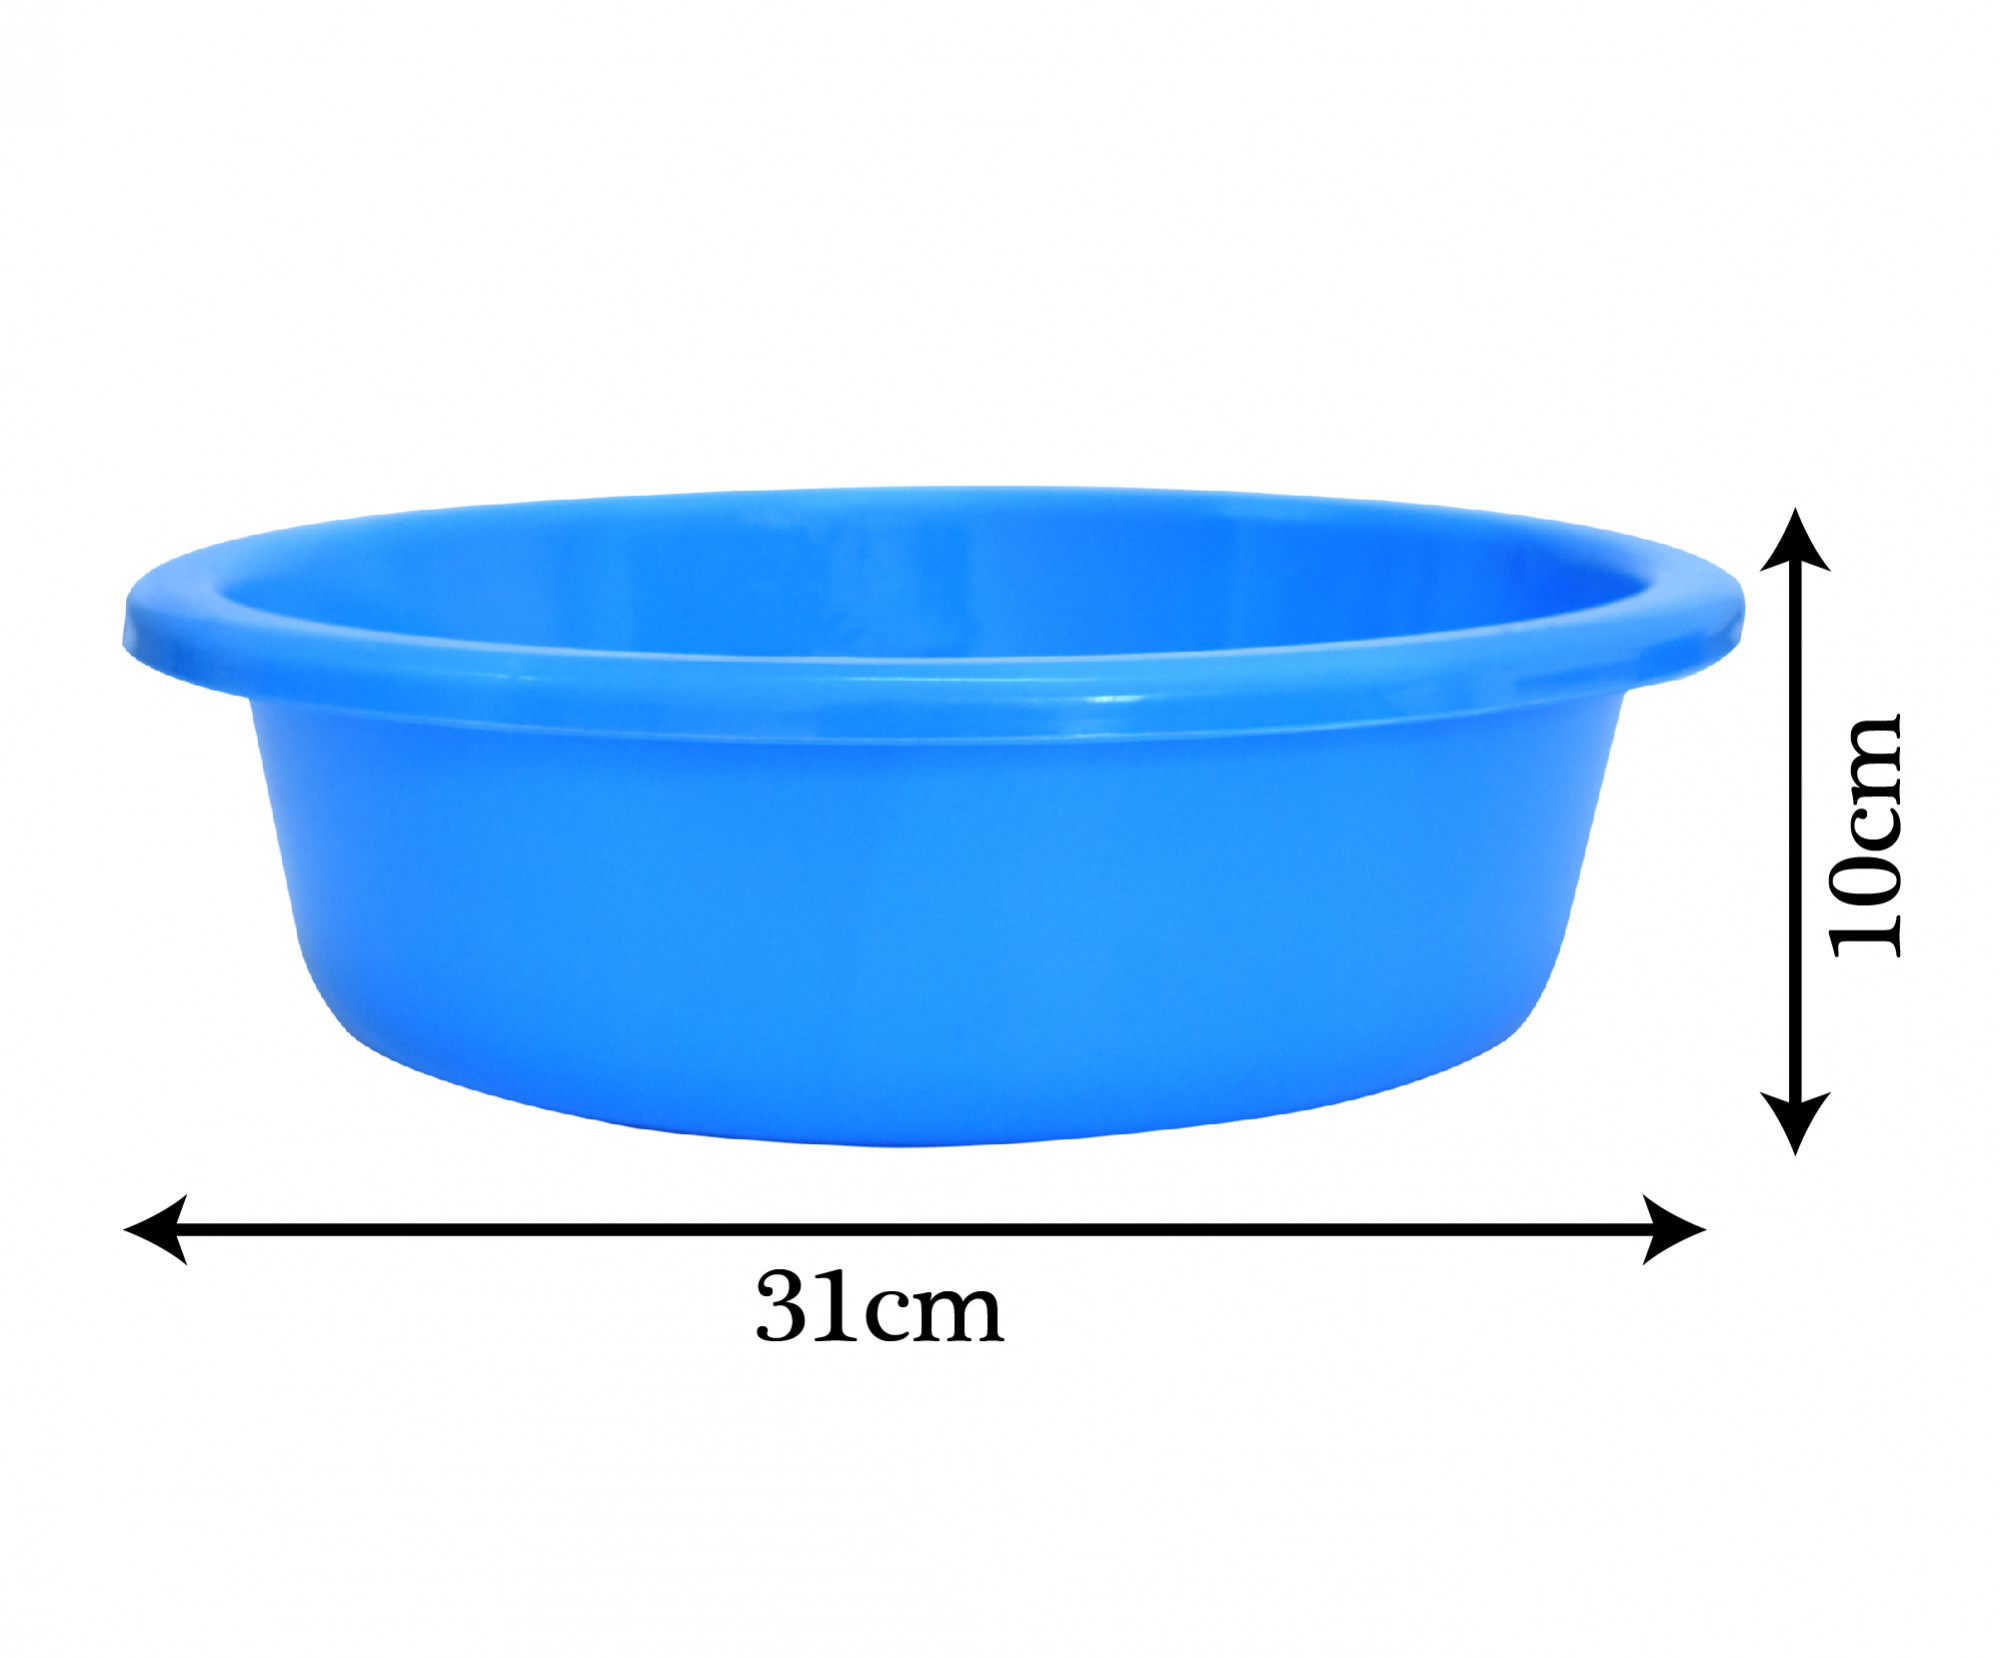 Kuber Industries Multiuses Unbreakable Plastic Knead Dough Basket/Basin Bowl For Home & Kitchen 6 Ltr (Blue)